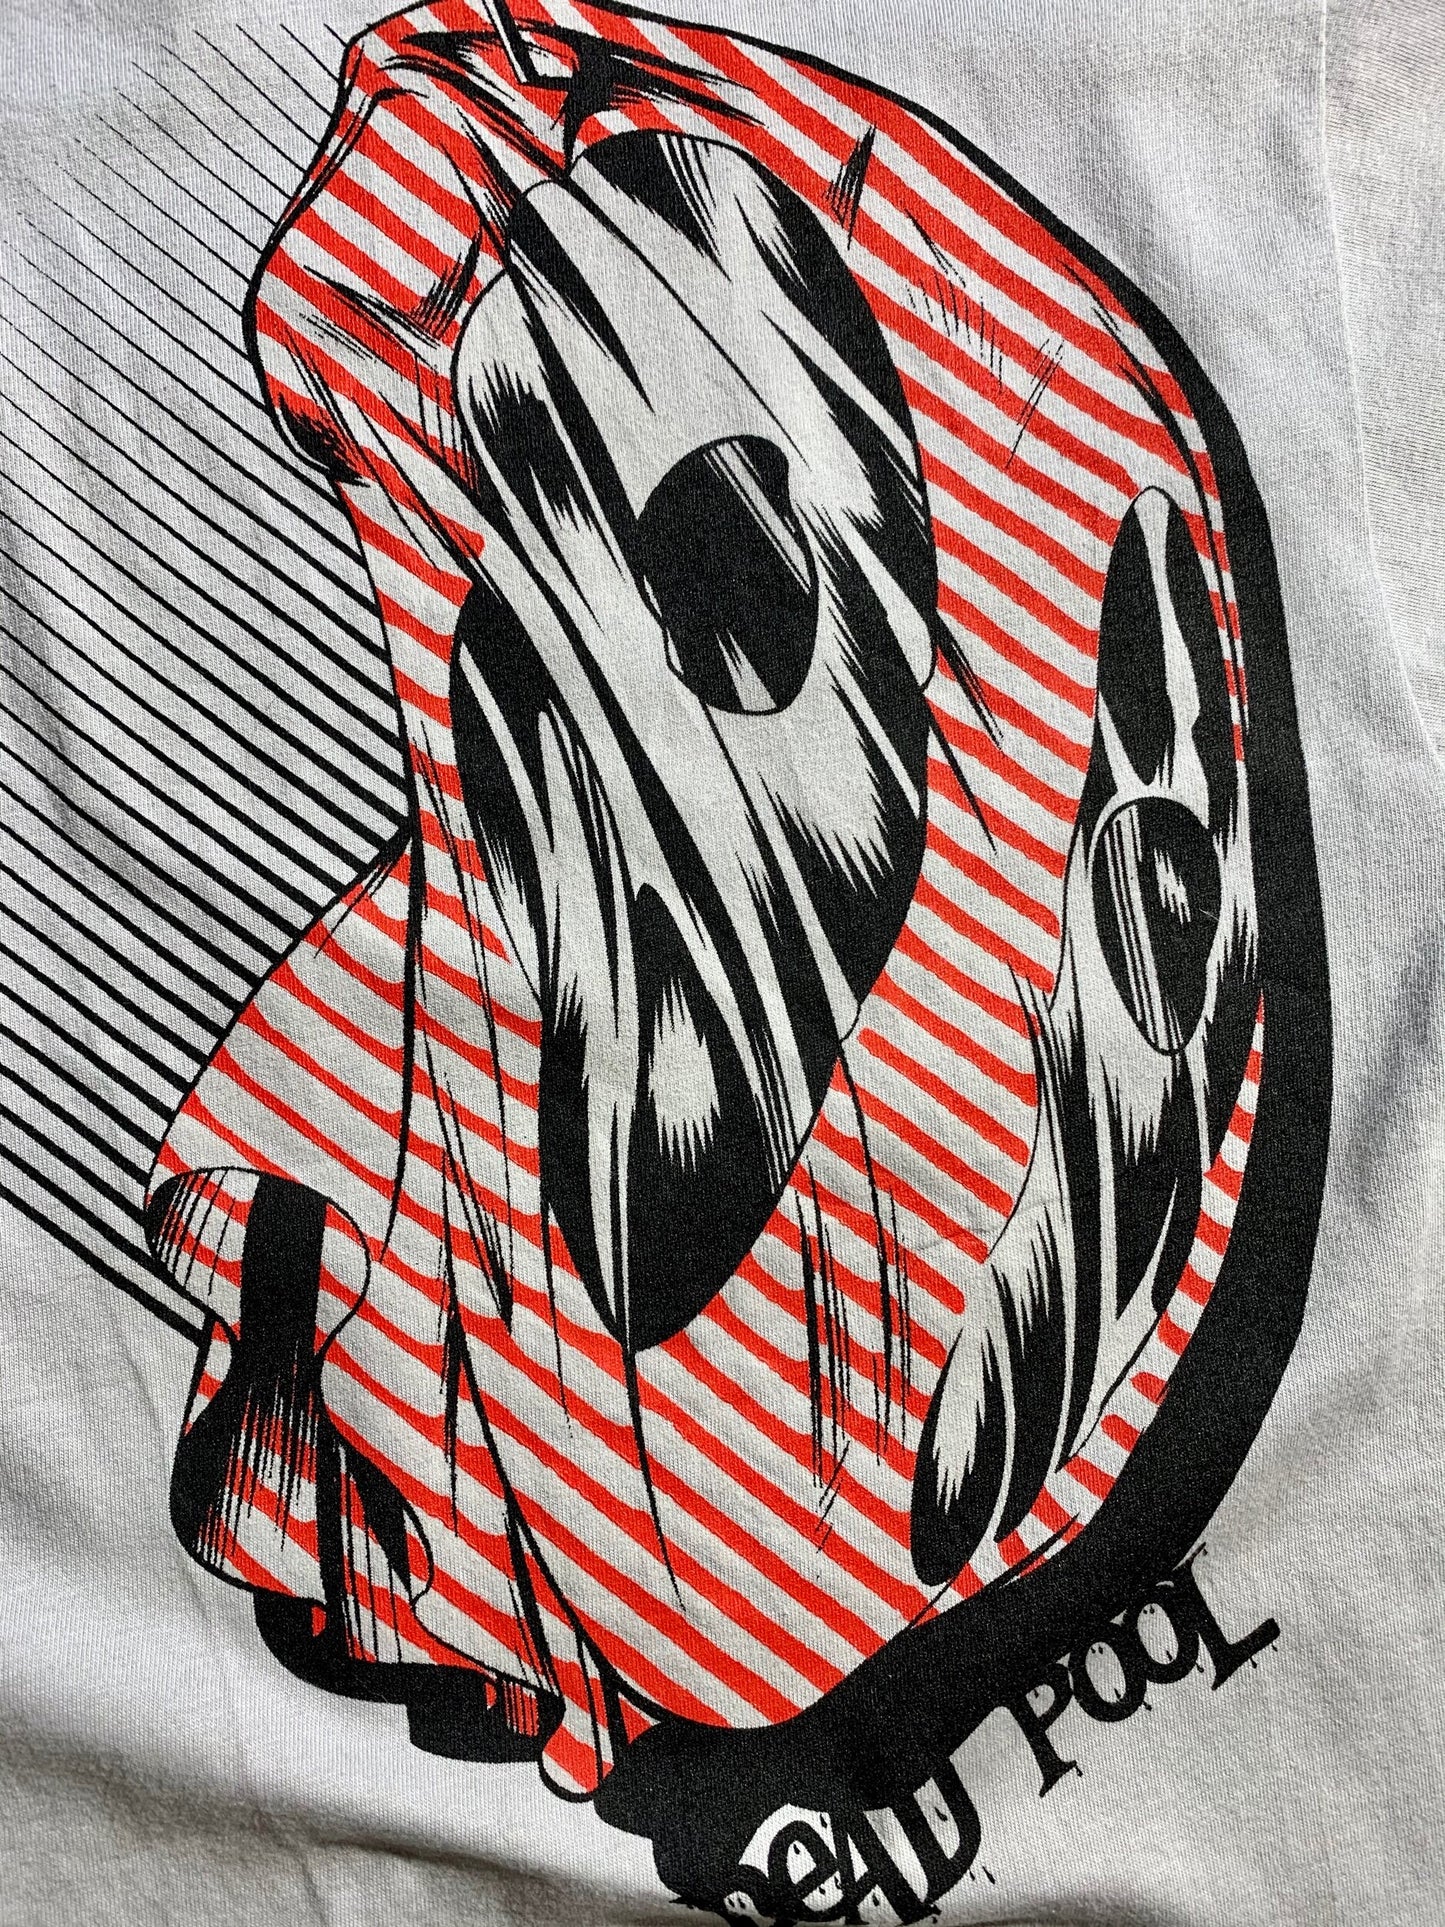 Vintage Deadpool T-Shirt